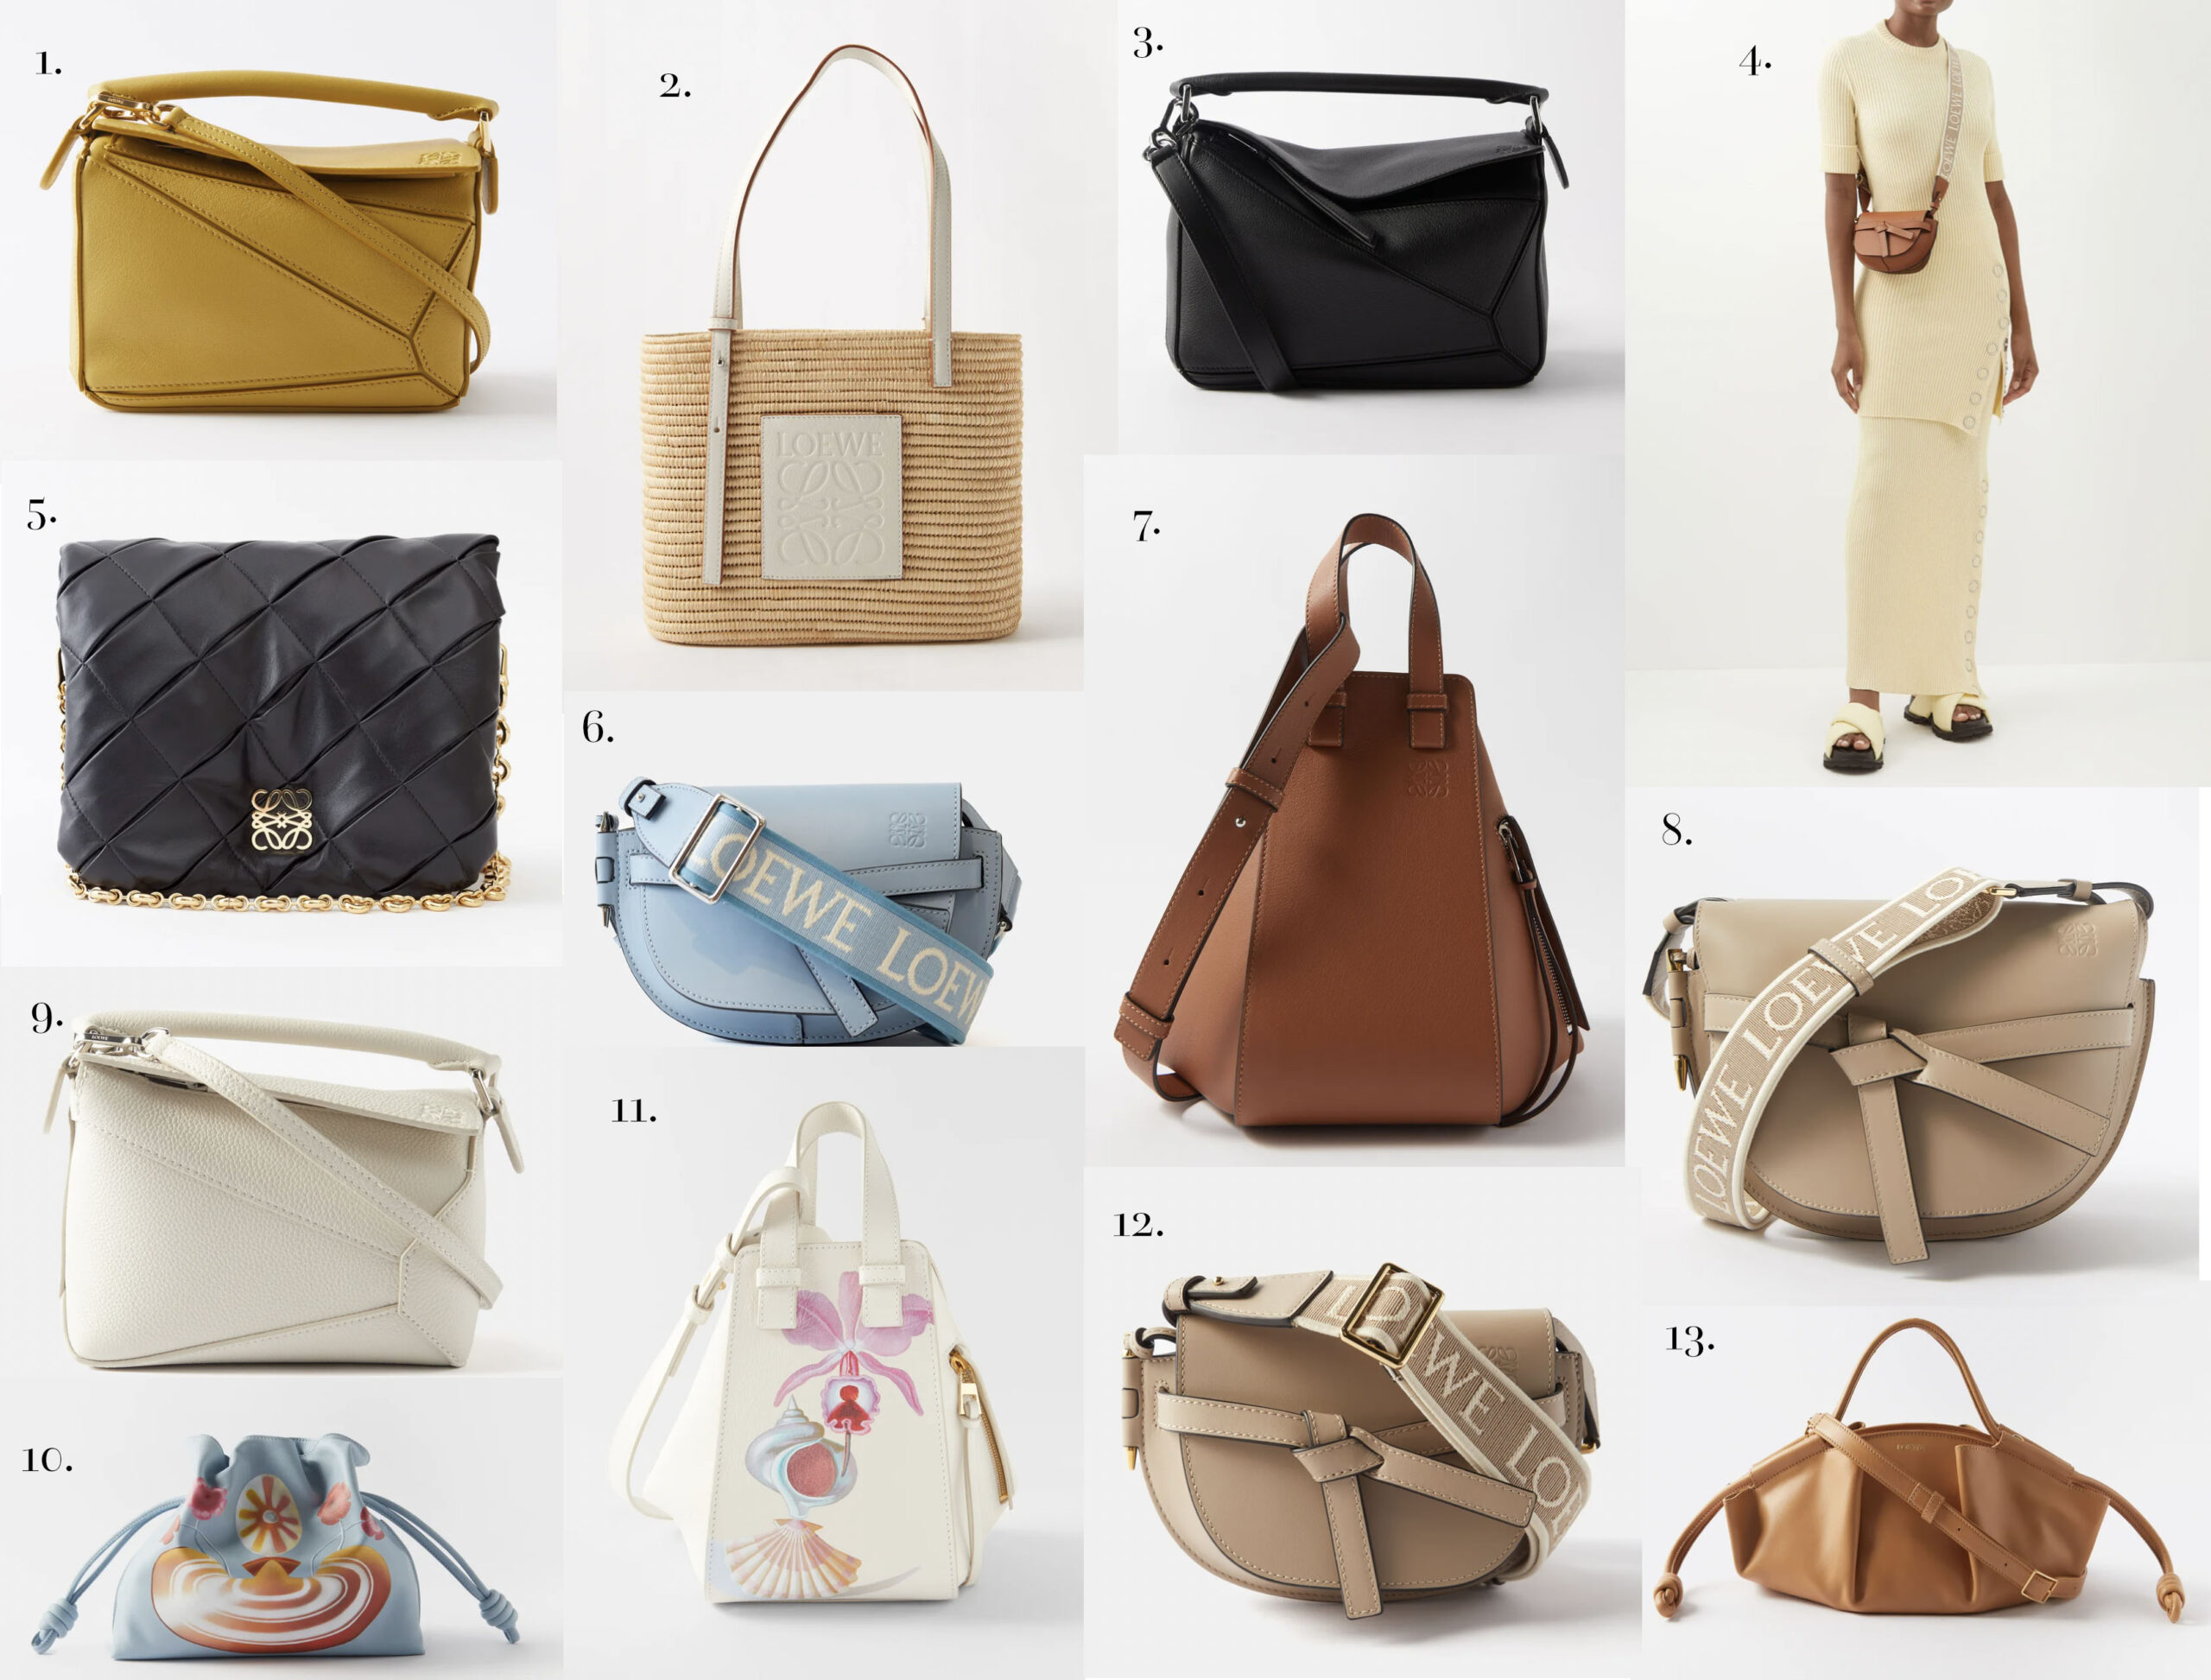 Loewe Goya Bag 2021: The Perfect Bag For Fall/Winter